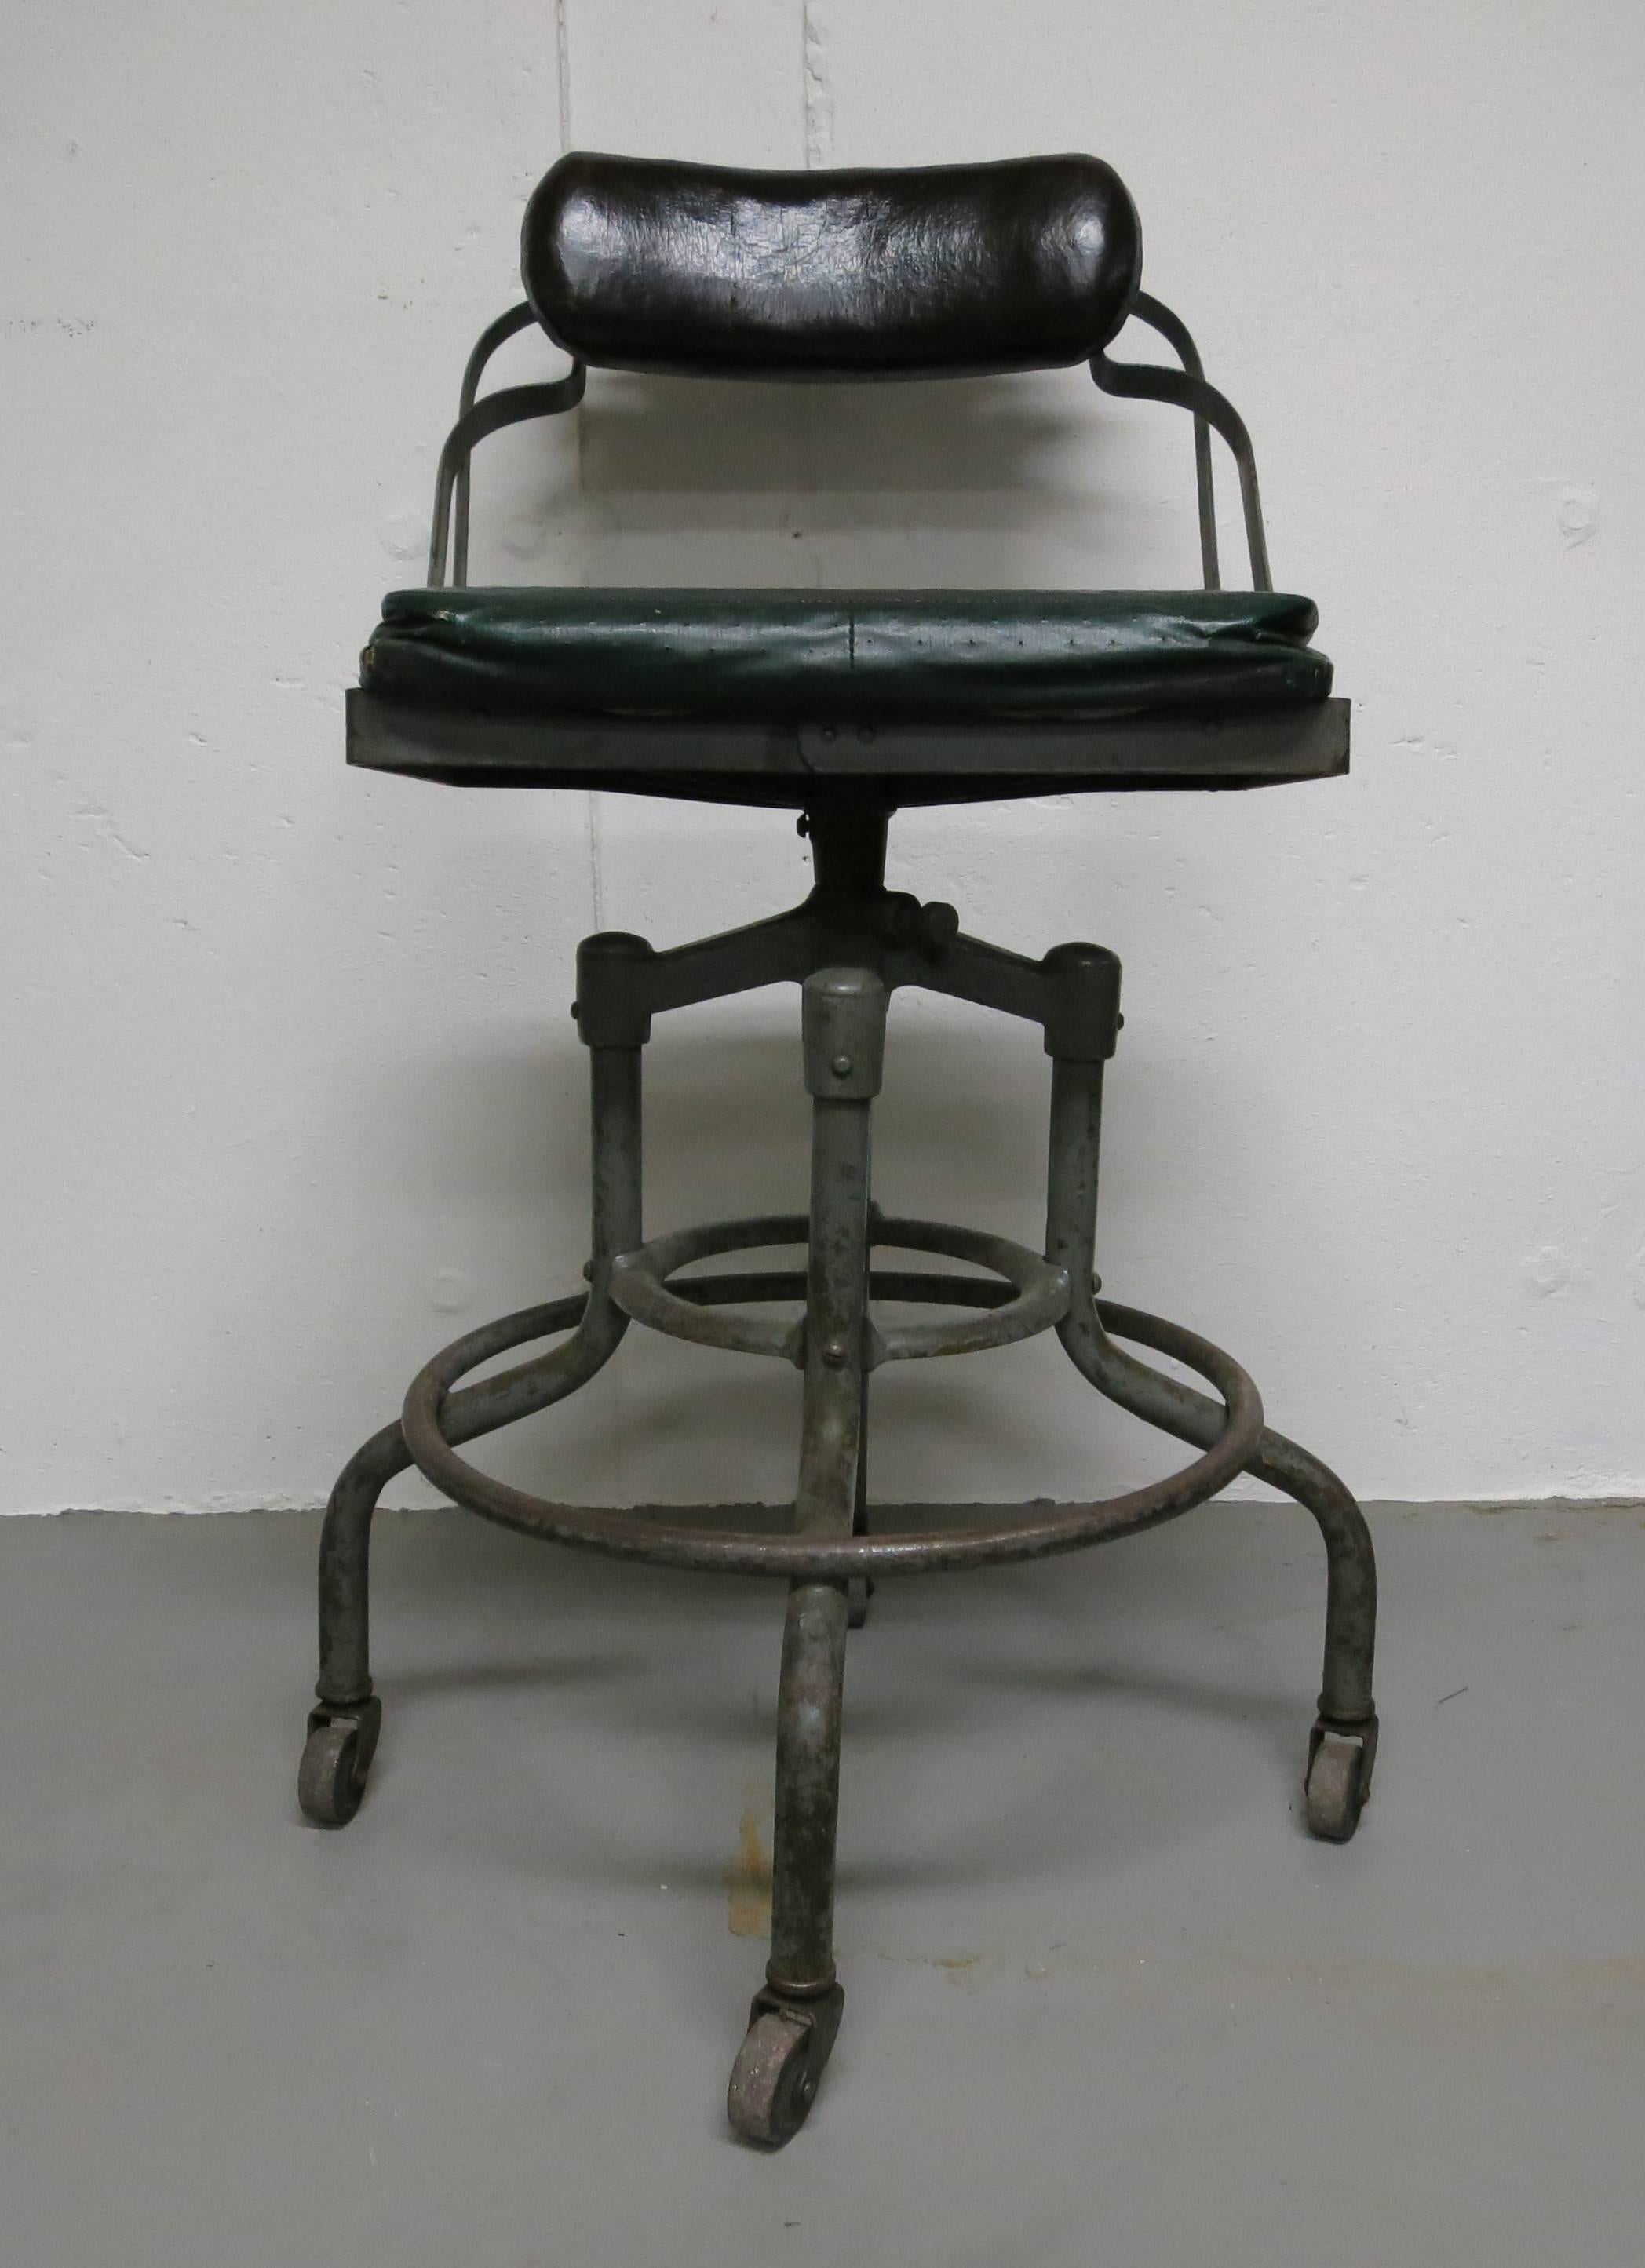 Vintage Fritz Cross Industrial Chair Stool St. Paul Minnesota 2